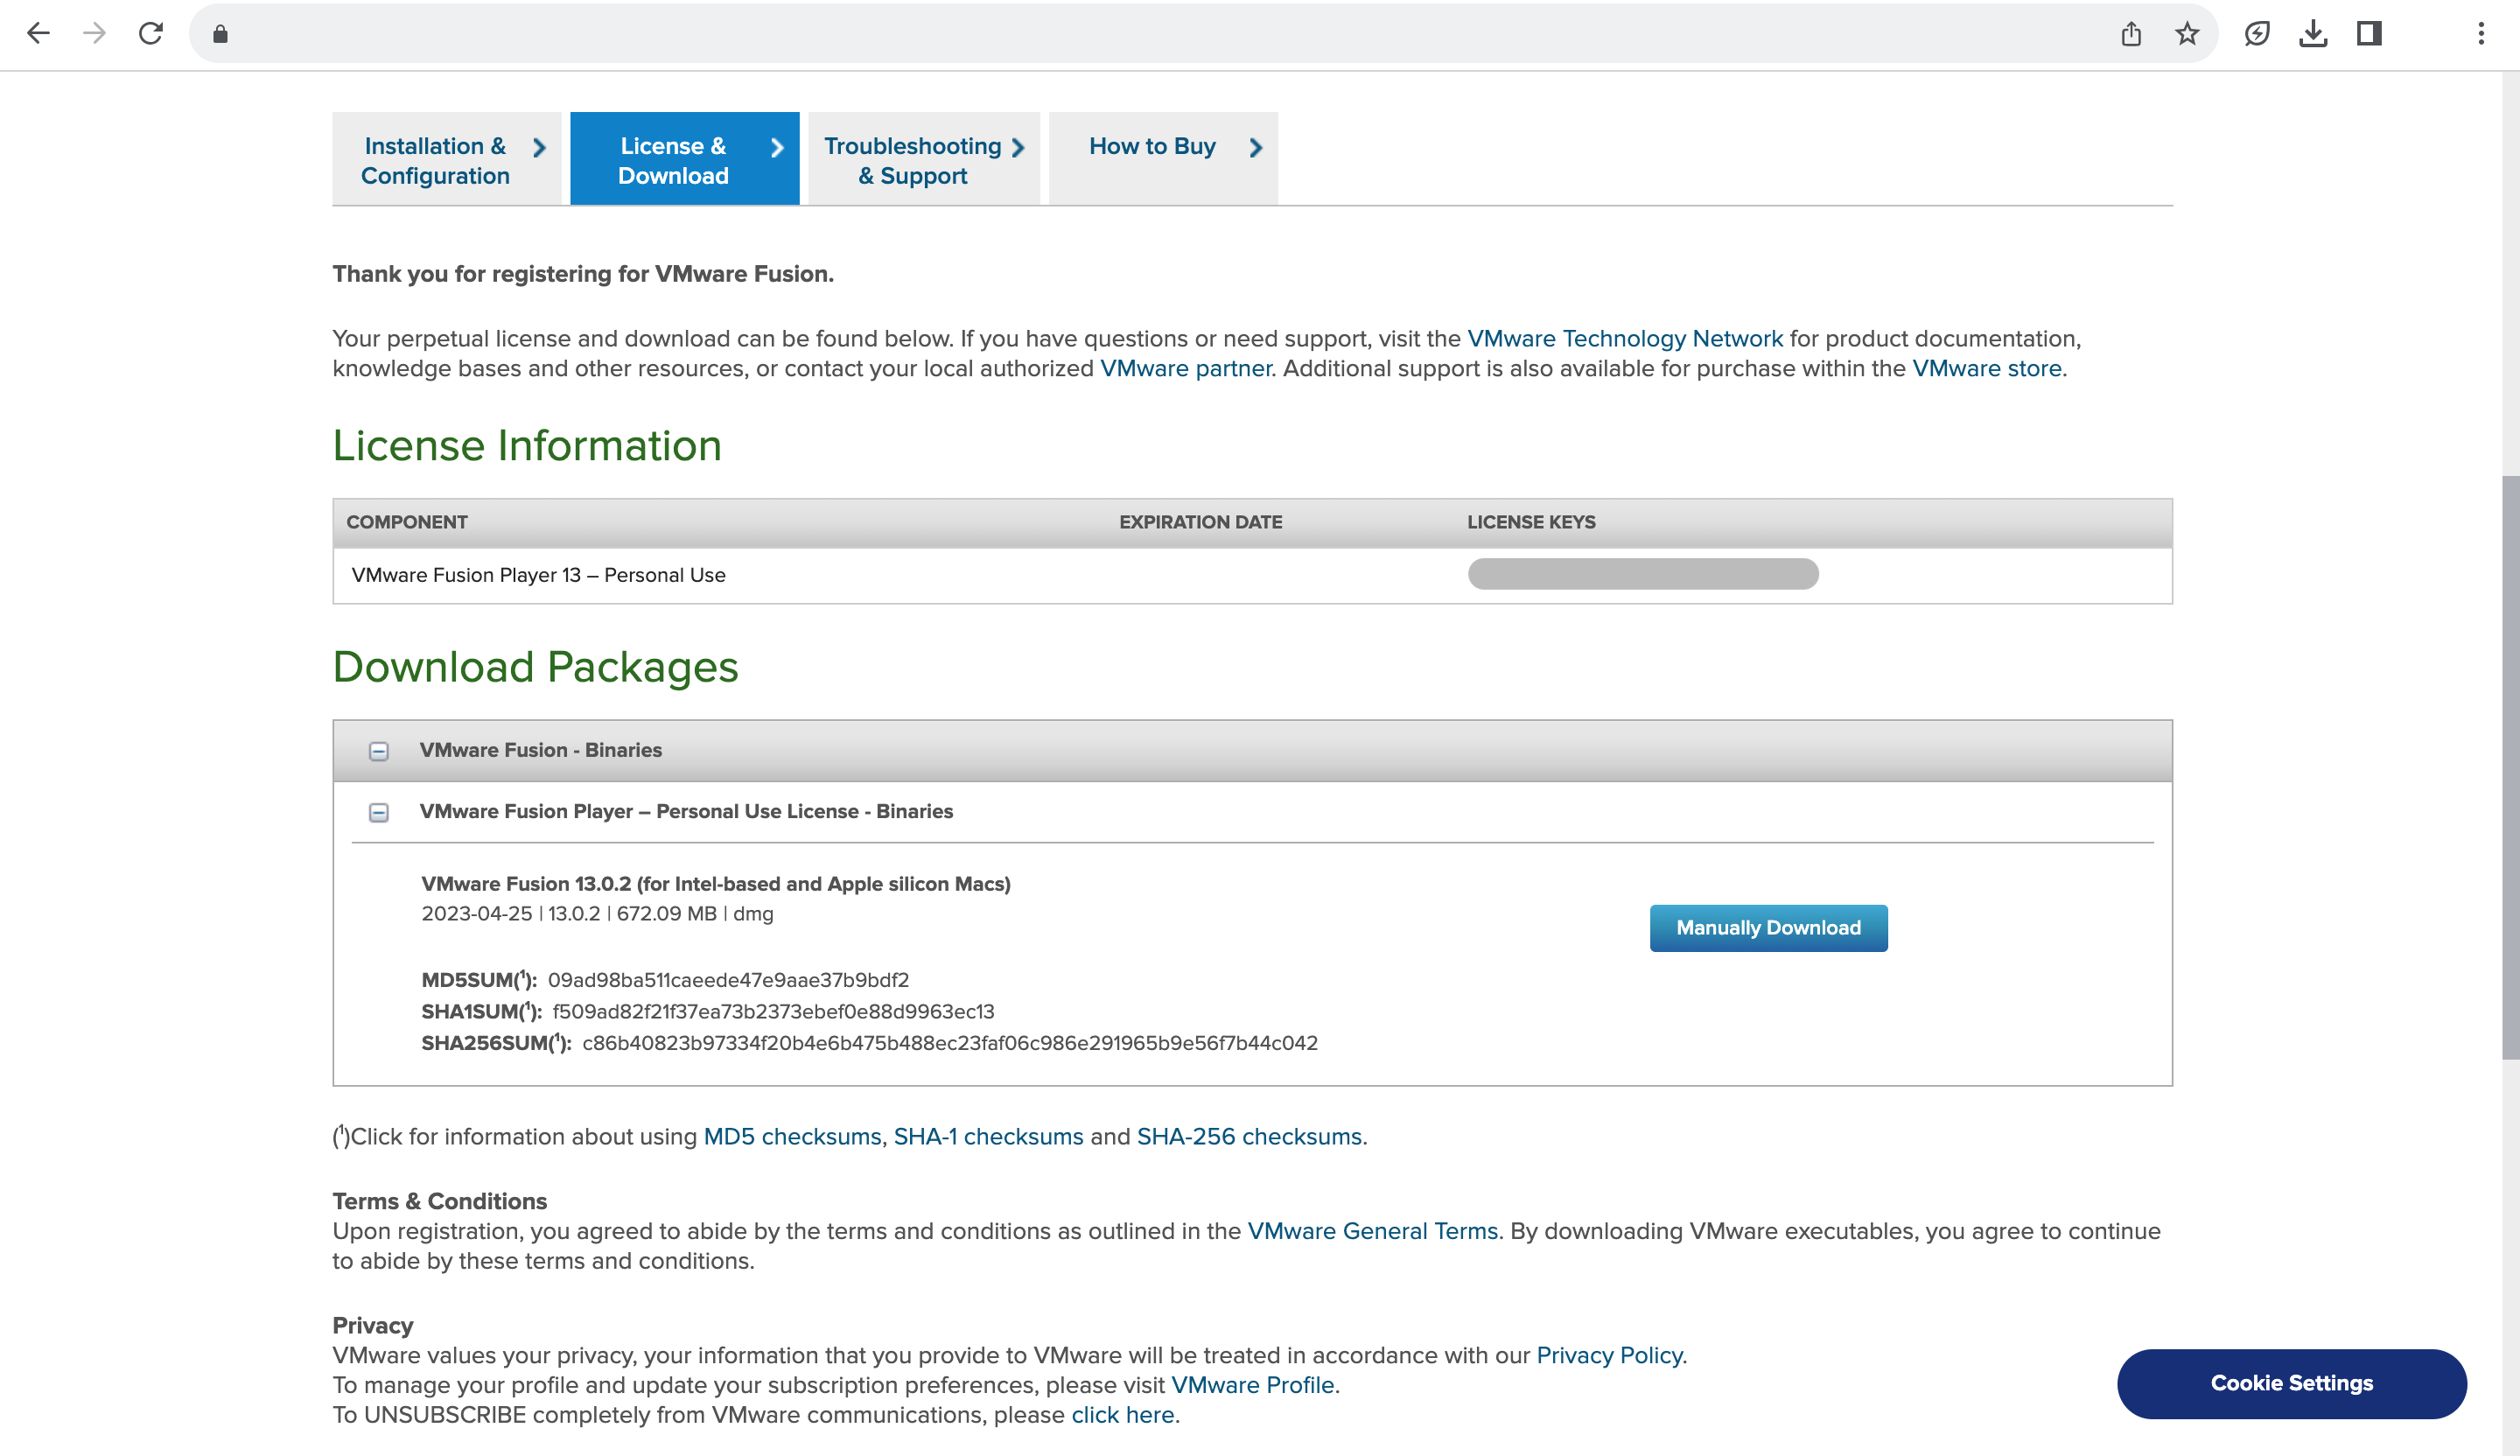 Screenshot of VMware Fusion Personal Use License key page.